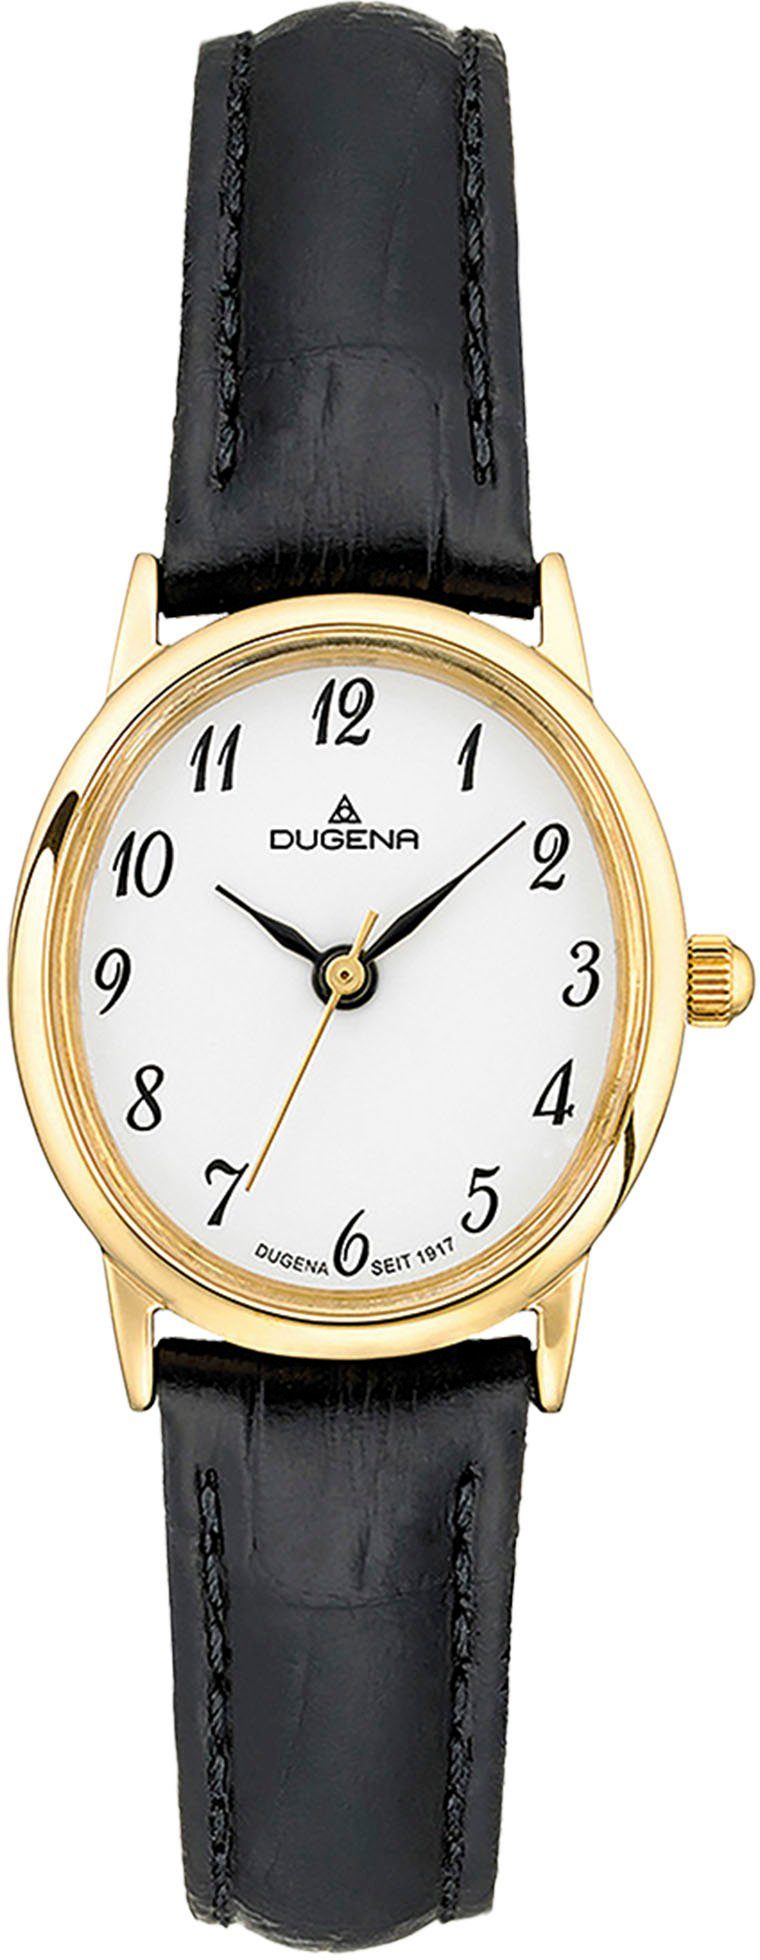 Dugena Quarzuhr Vintage, 4460783, Armbanduhr, Damenuhr